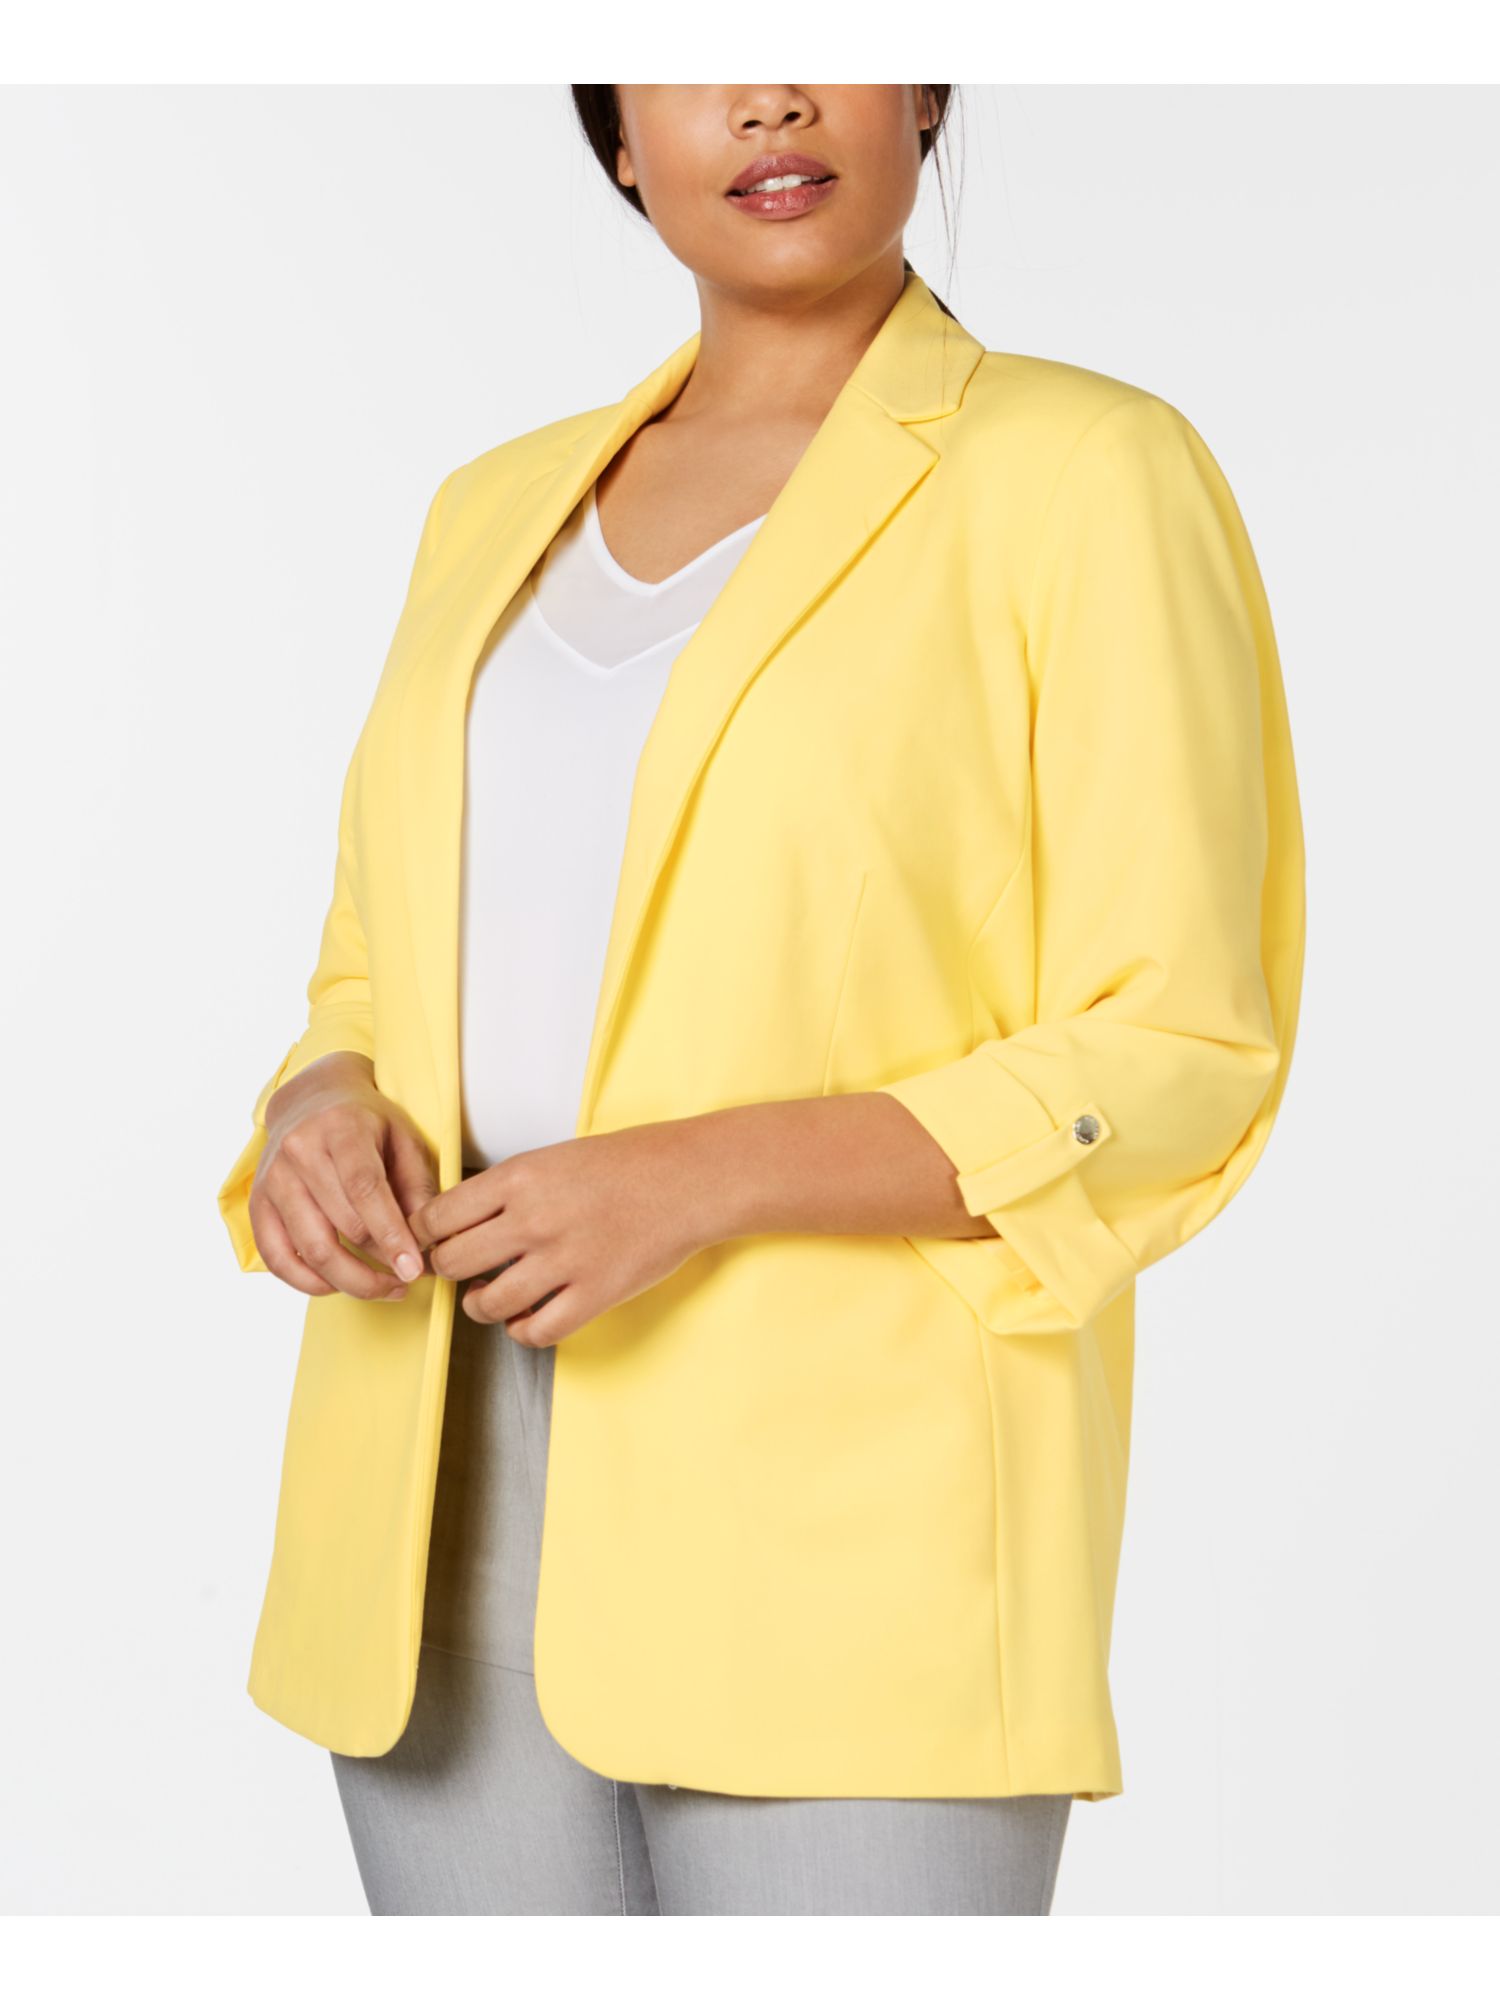 CALVIN KLEIN Yellow Blazer Wear To Work Jacket Plus 3X in Indonesia. 706294695